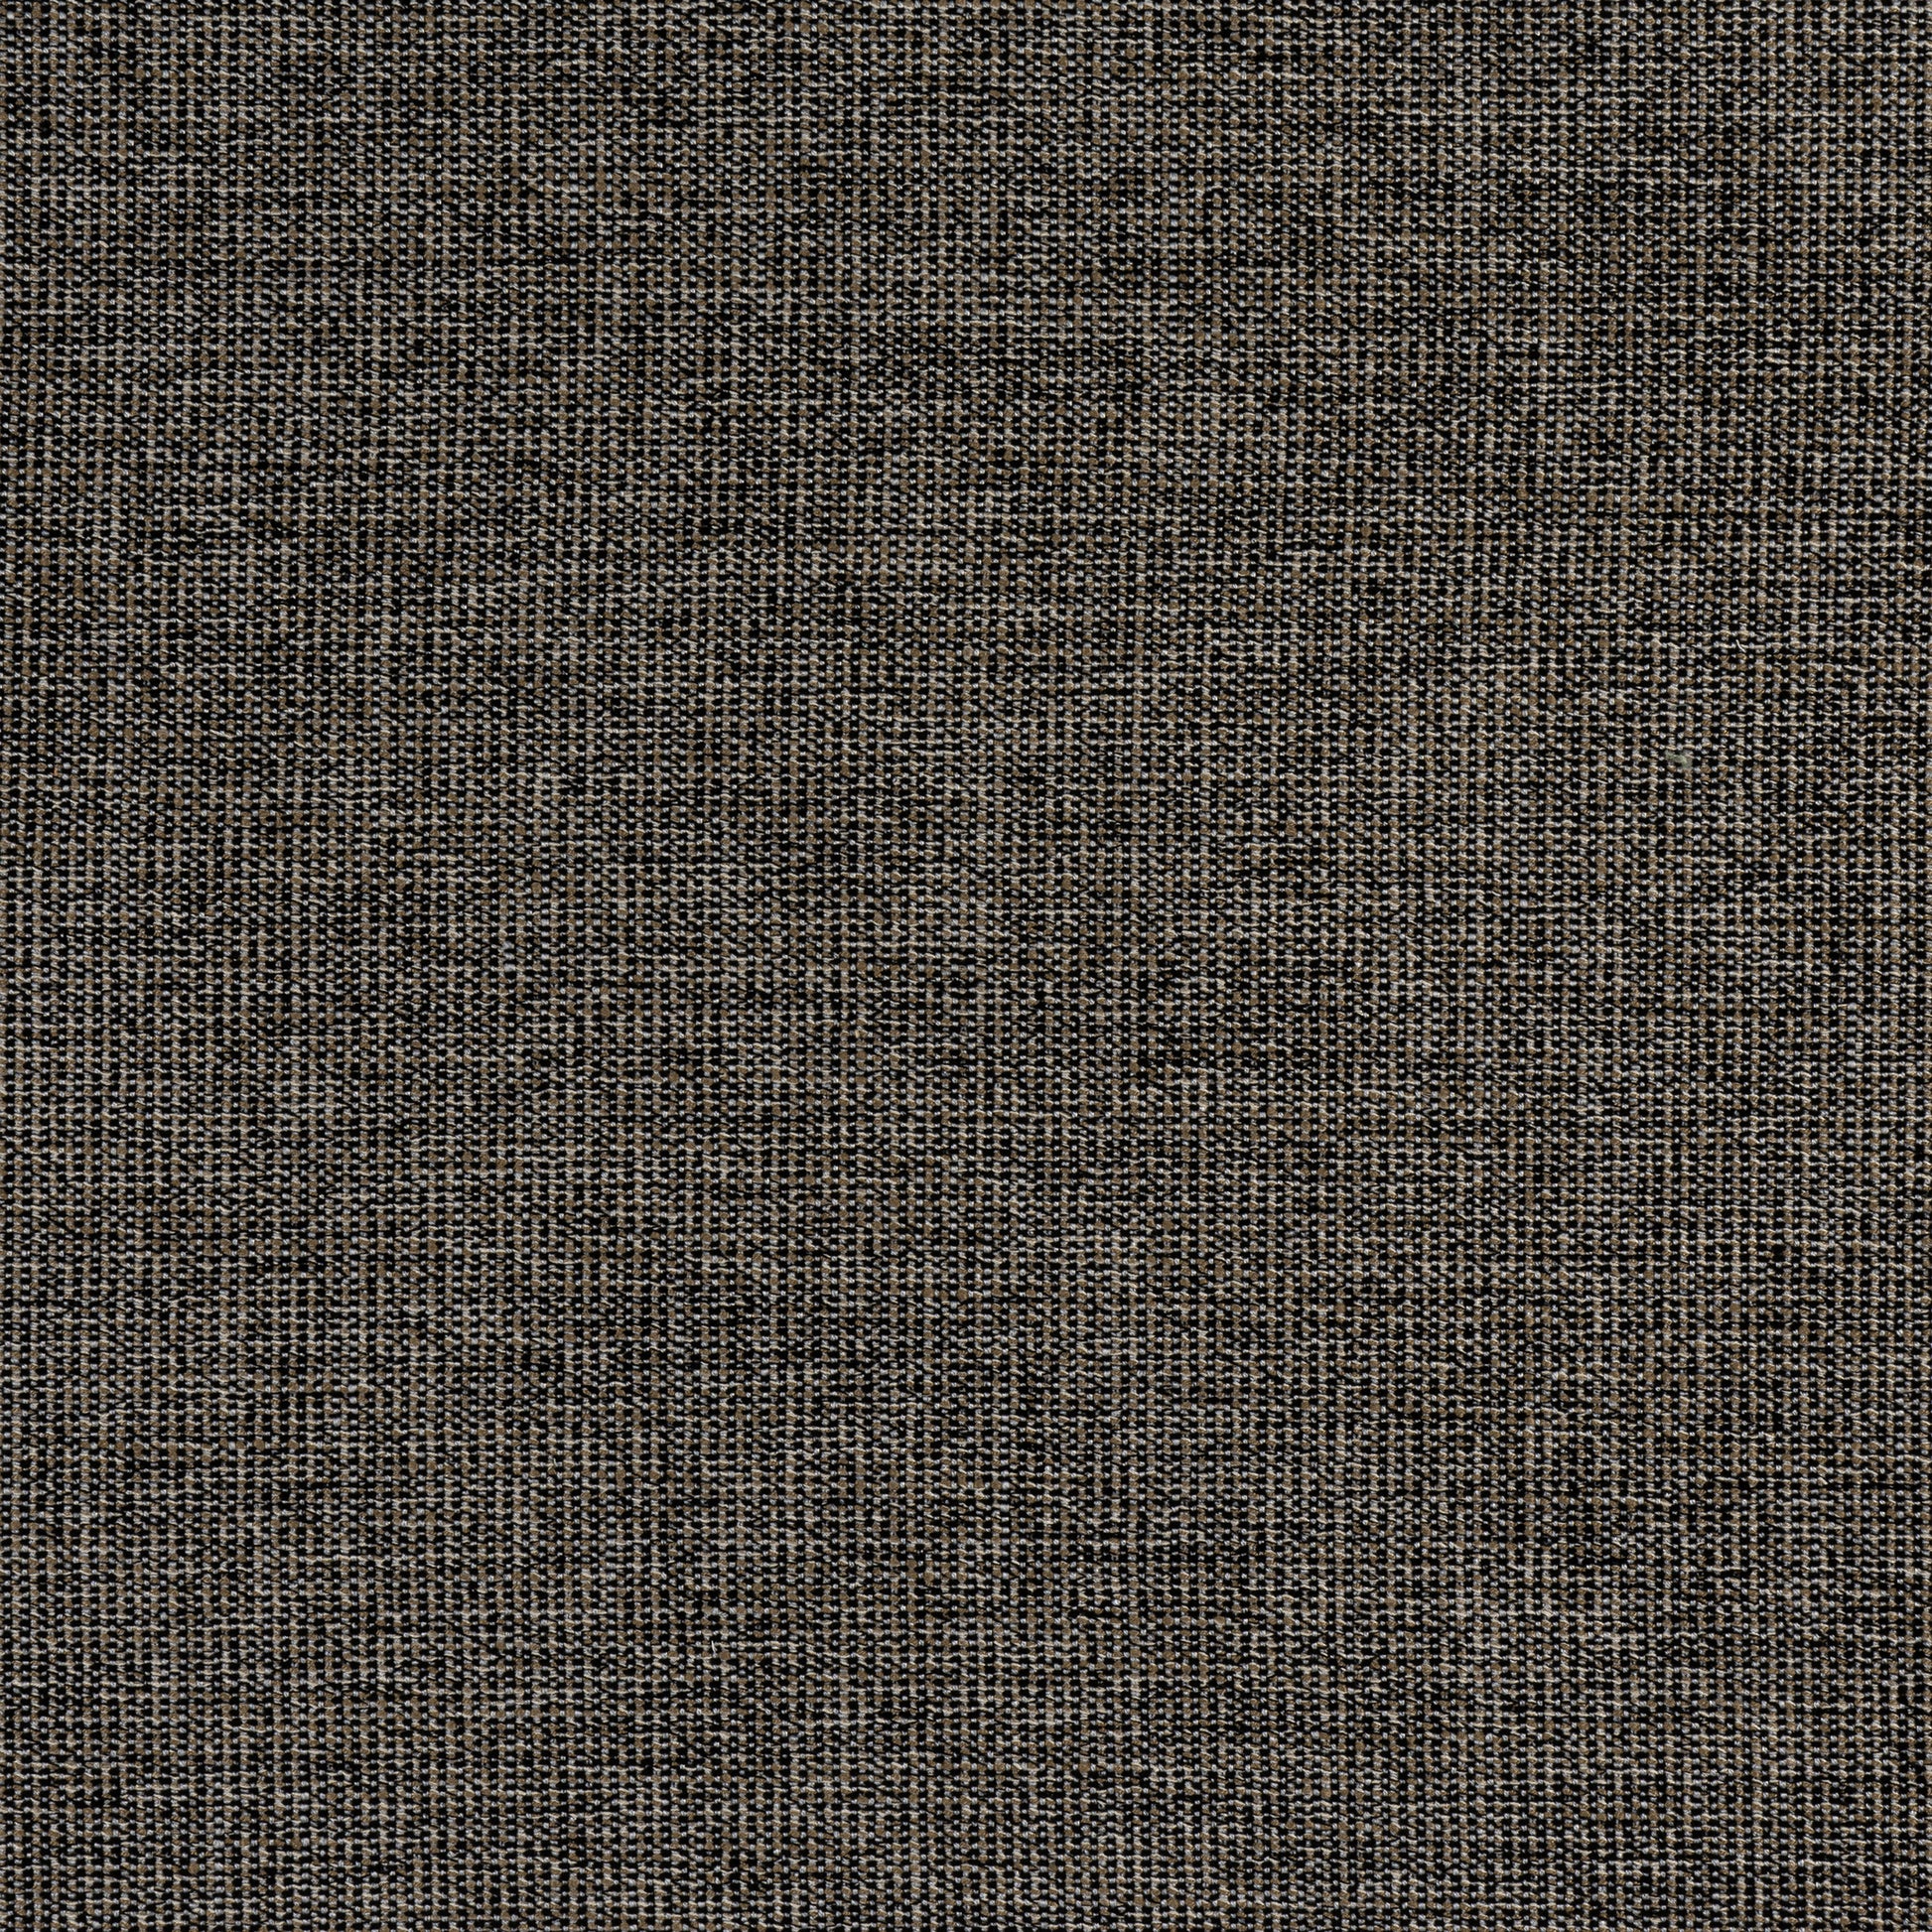 Purchase Thibaut Fabric SKU W8758 pattern name Sacchi color Ebony